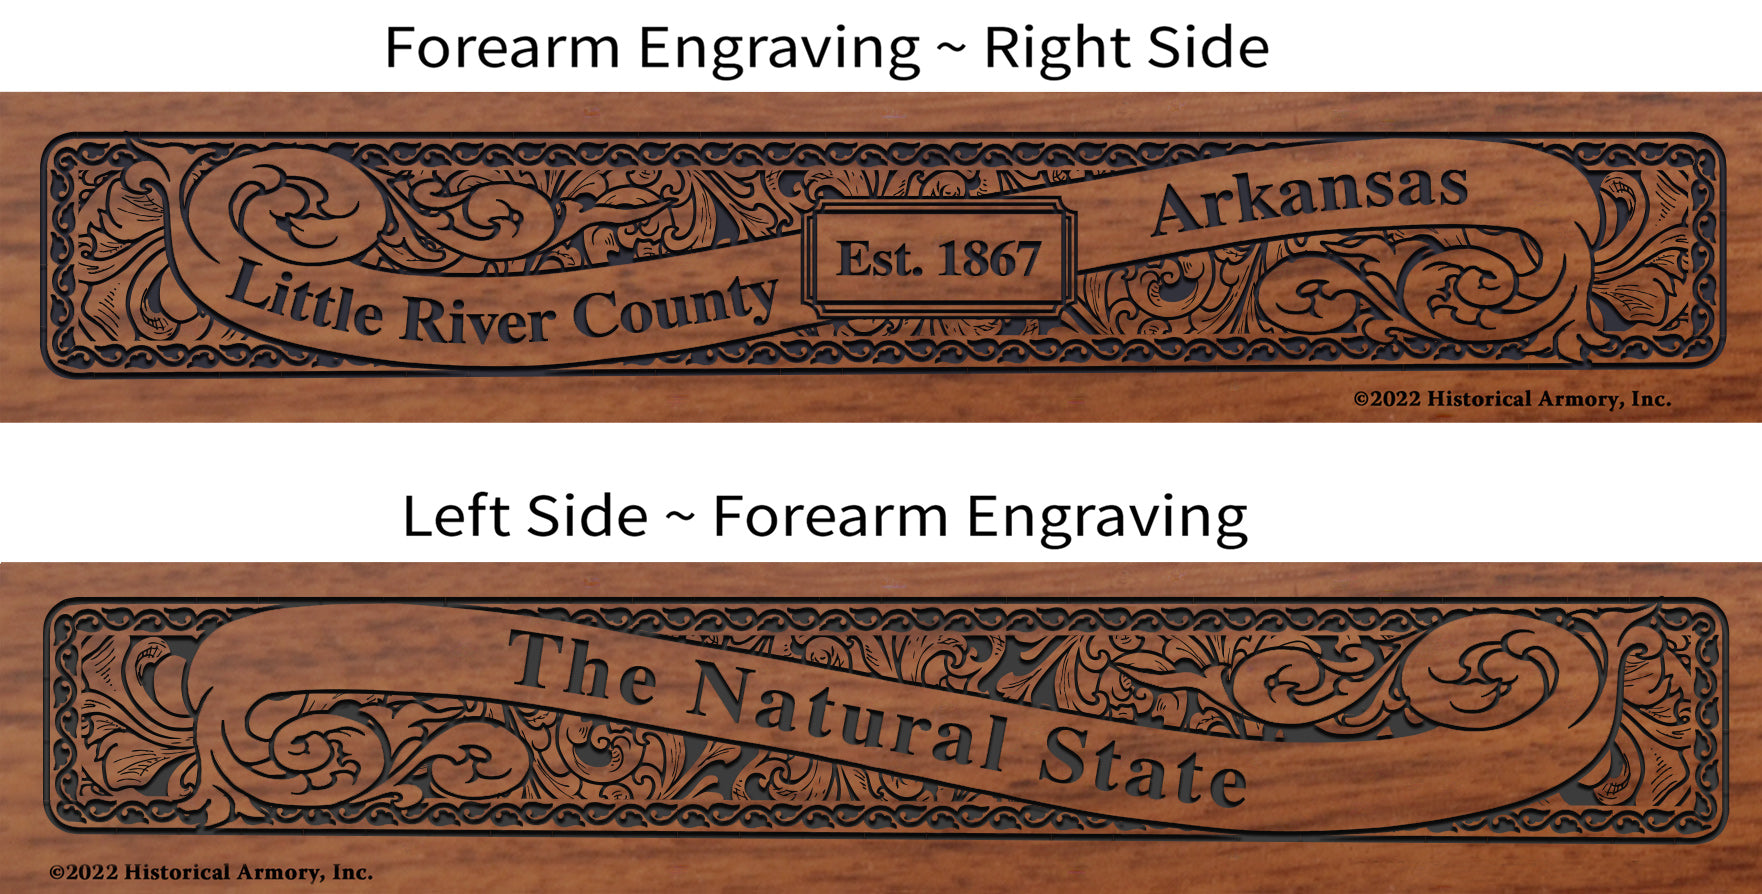 Little River County Arkansas Engraved Rifle Forearm